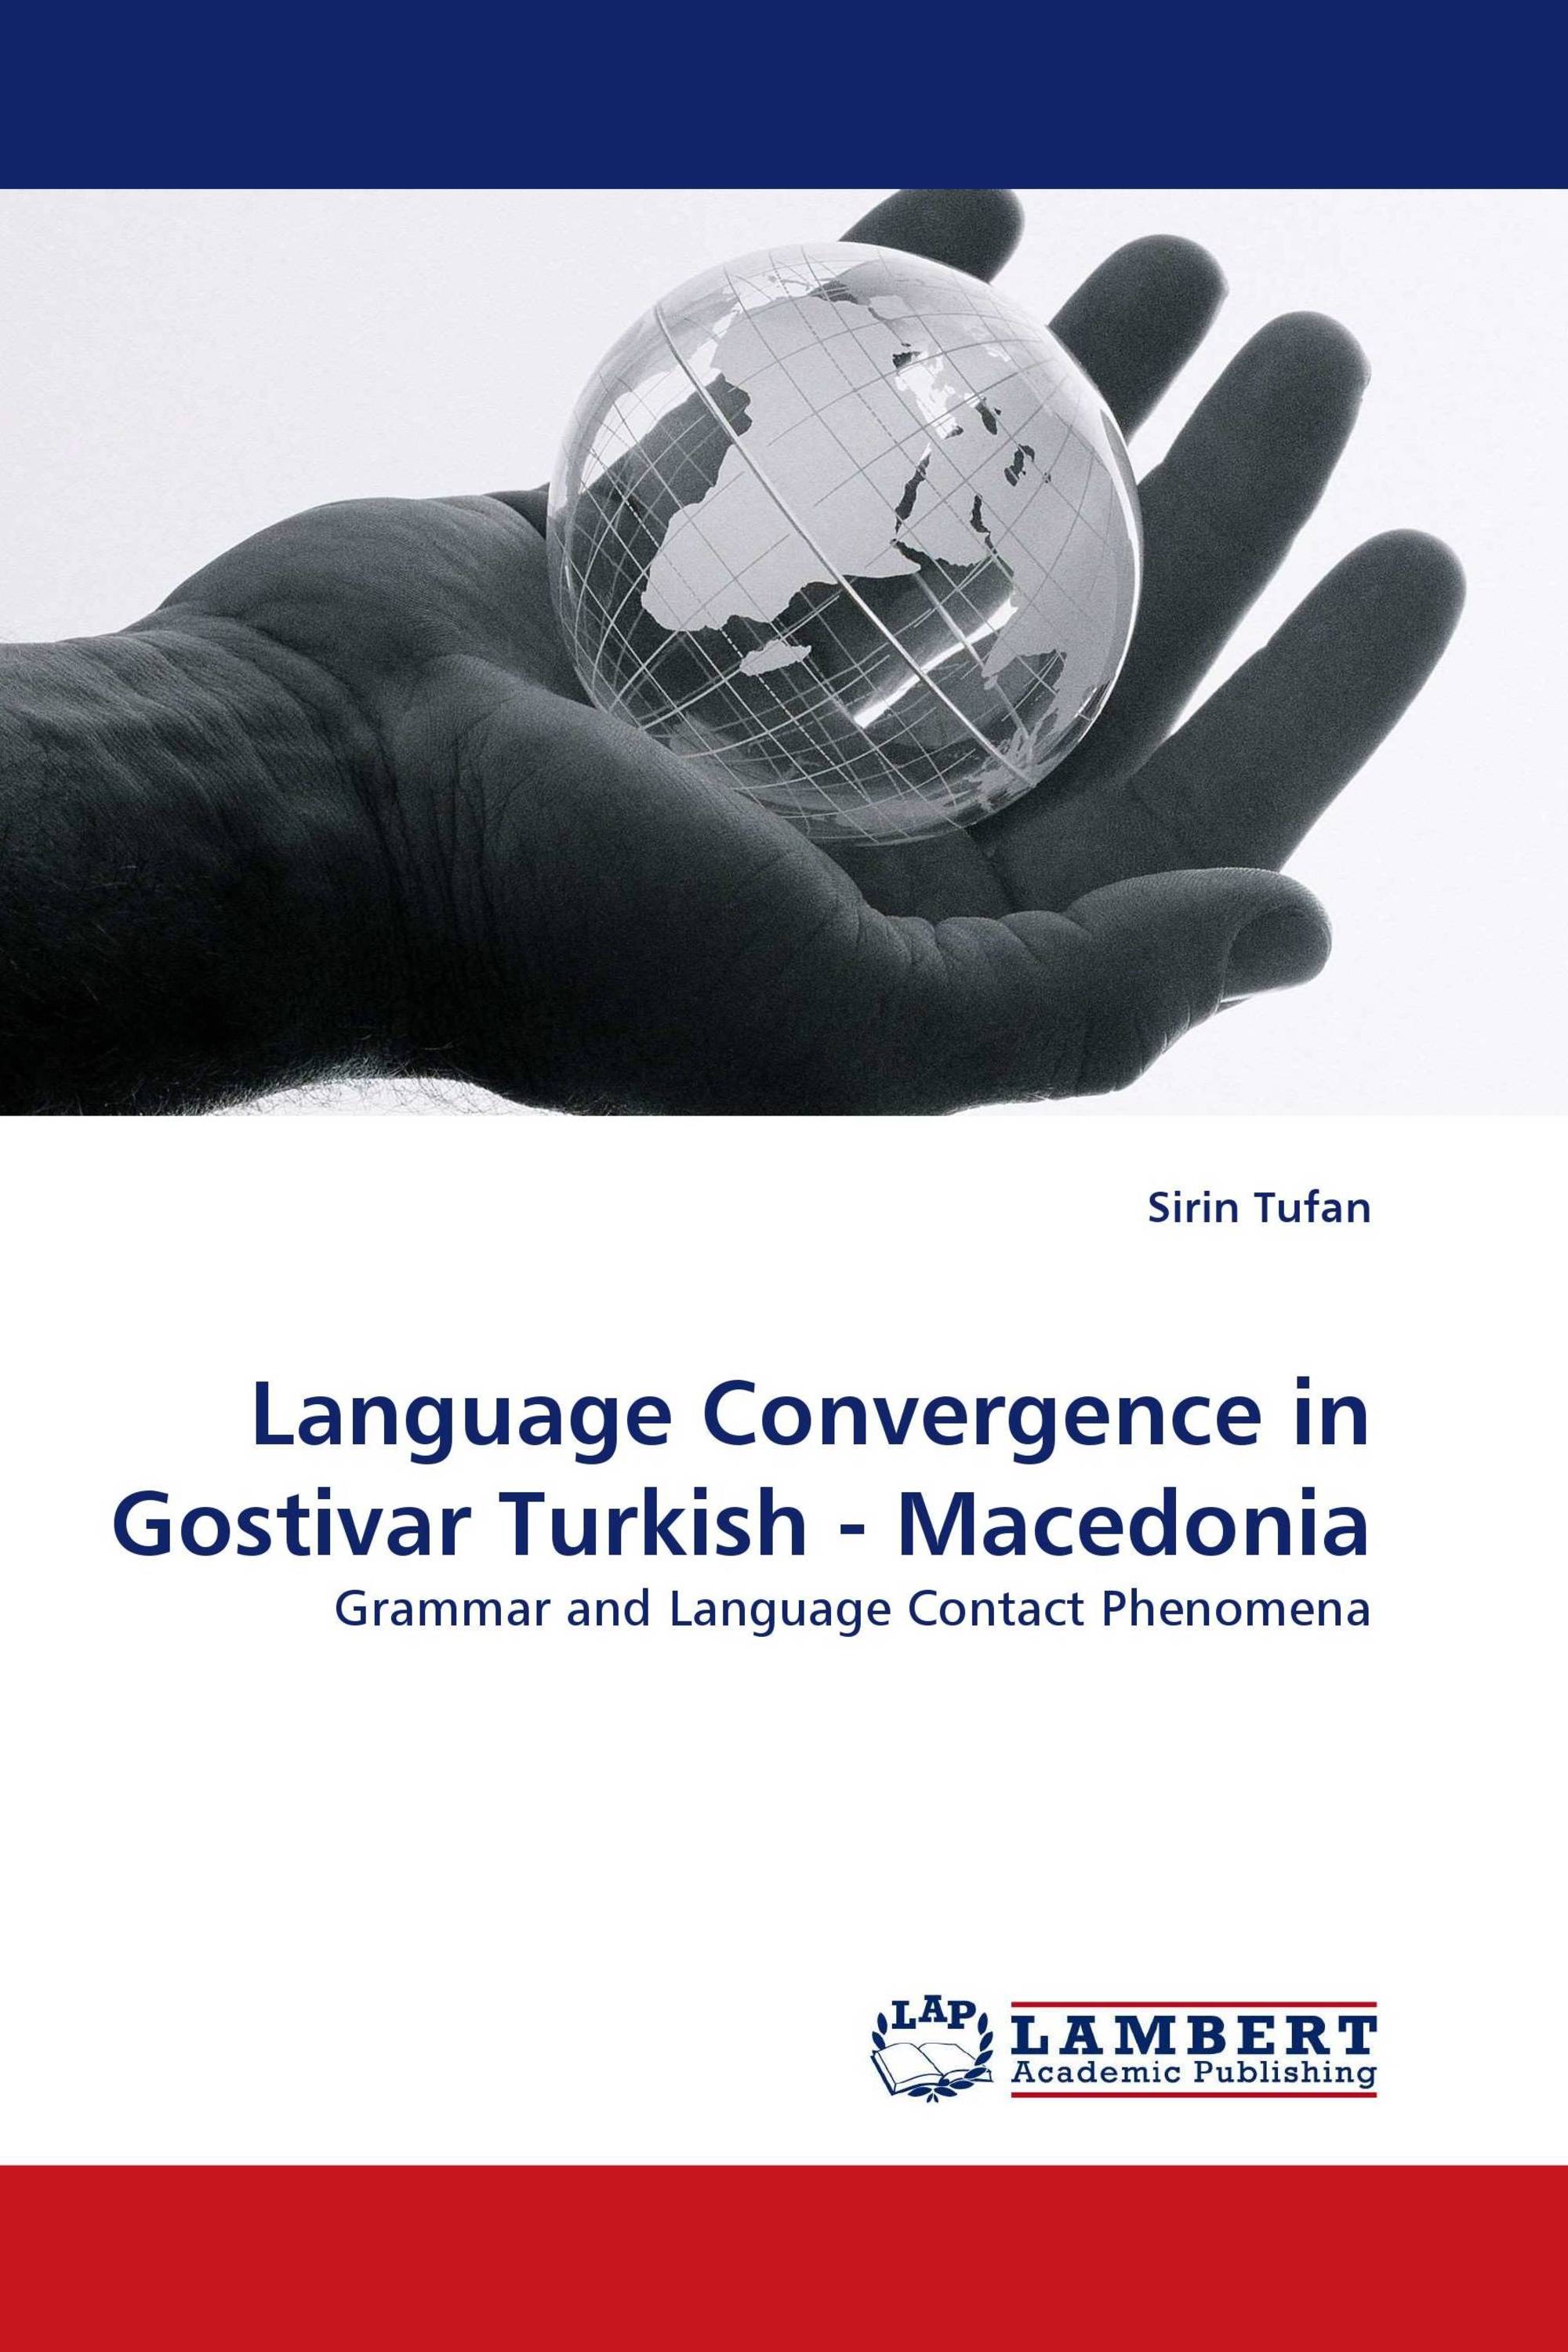 Language Convergence in Gostivar Turkish - Macedonia